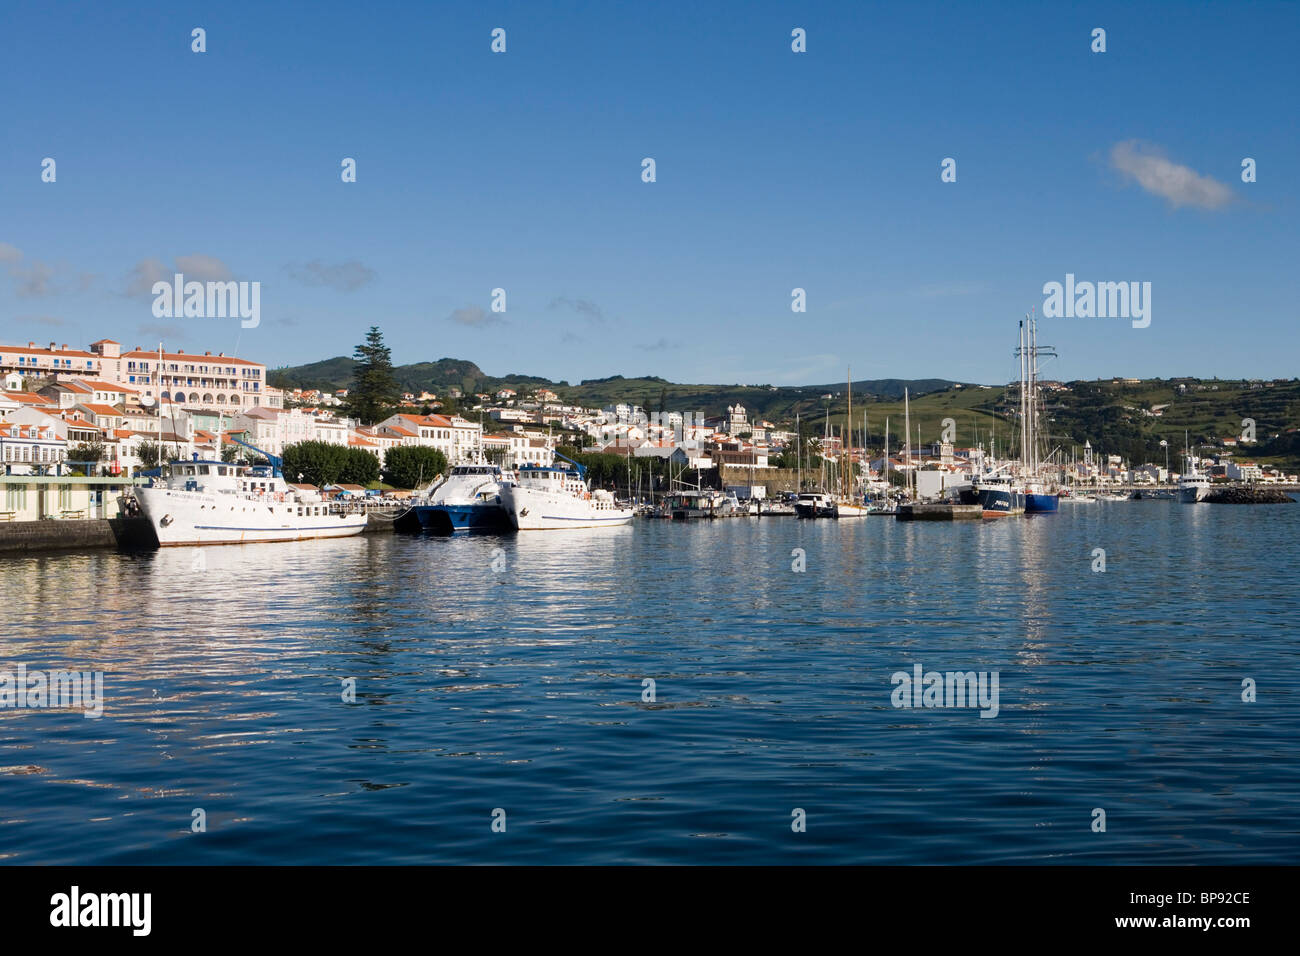 Horta Hafen, Horta, Insel Faial, Azoren, Portugal, Europa Stockfoto